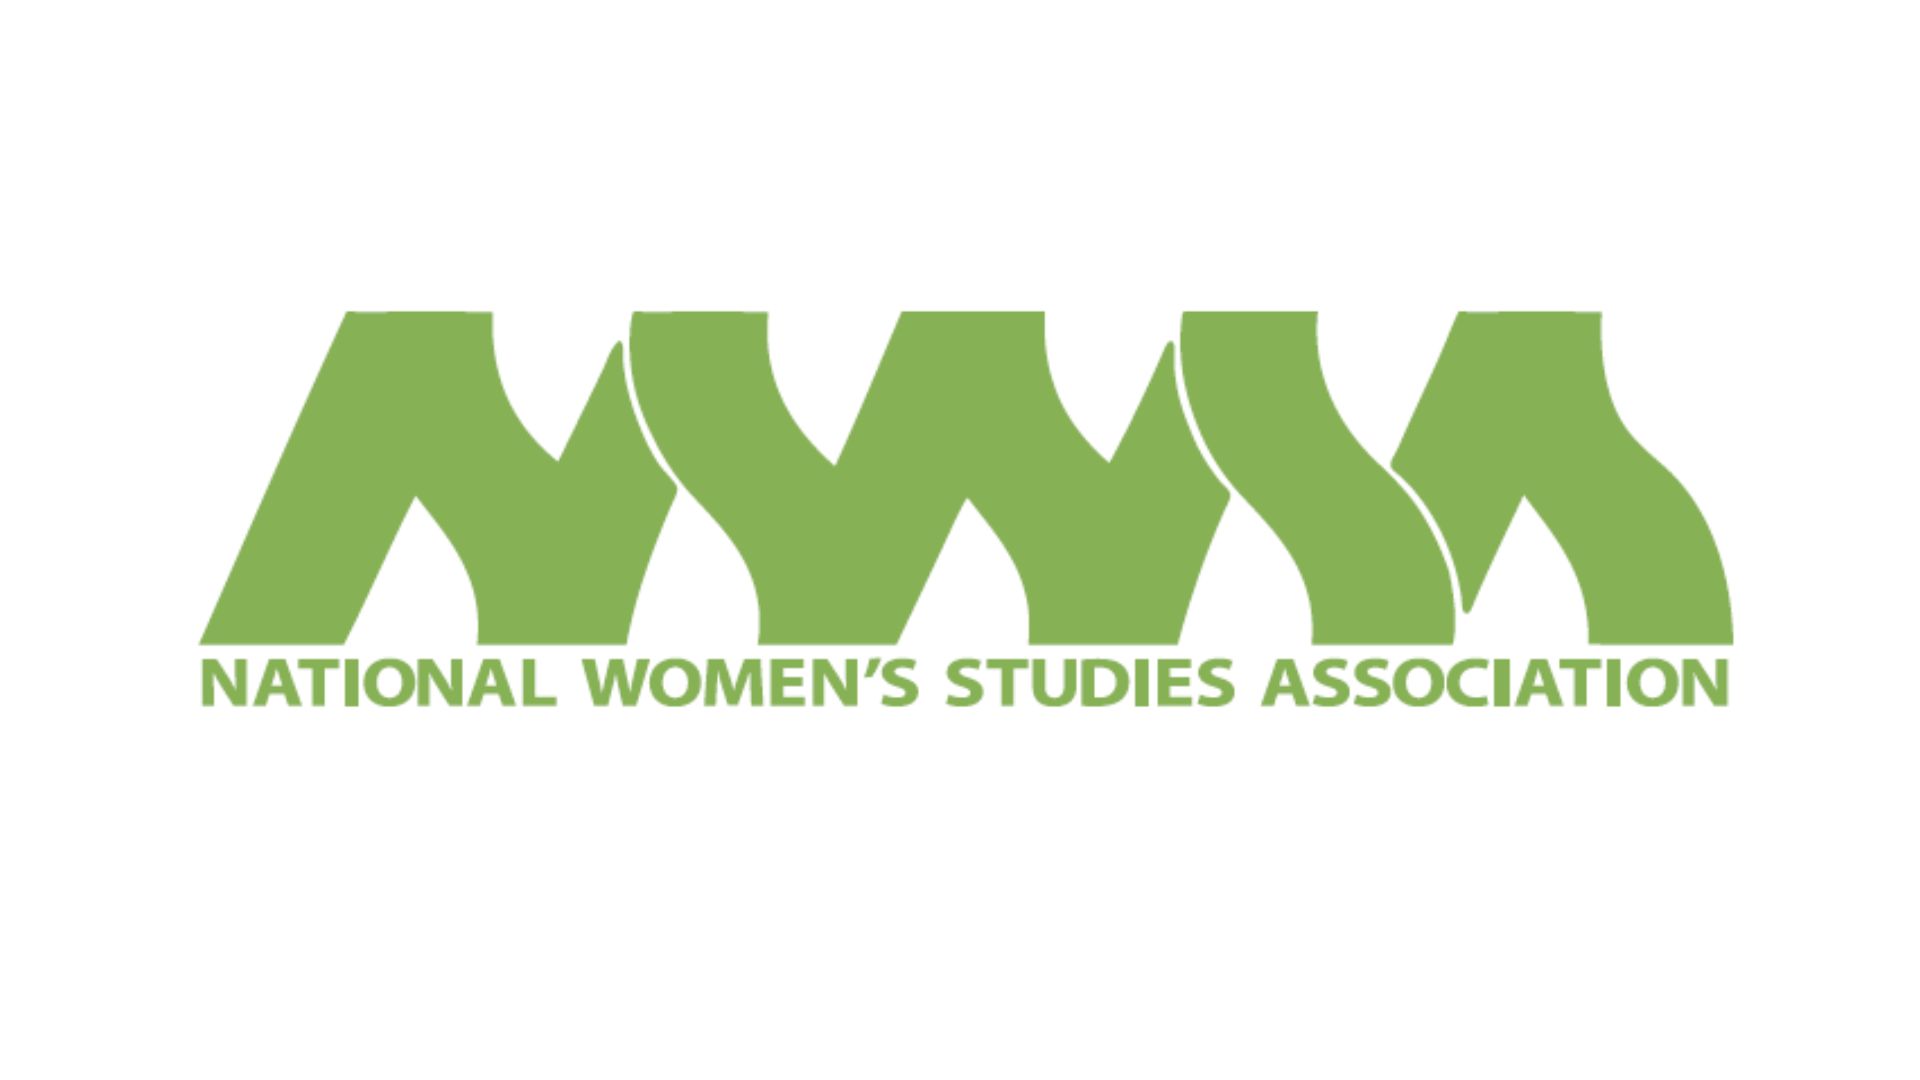 The NWSA logo